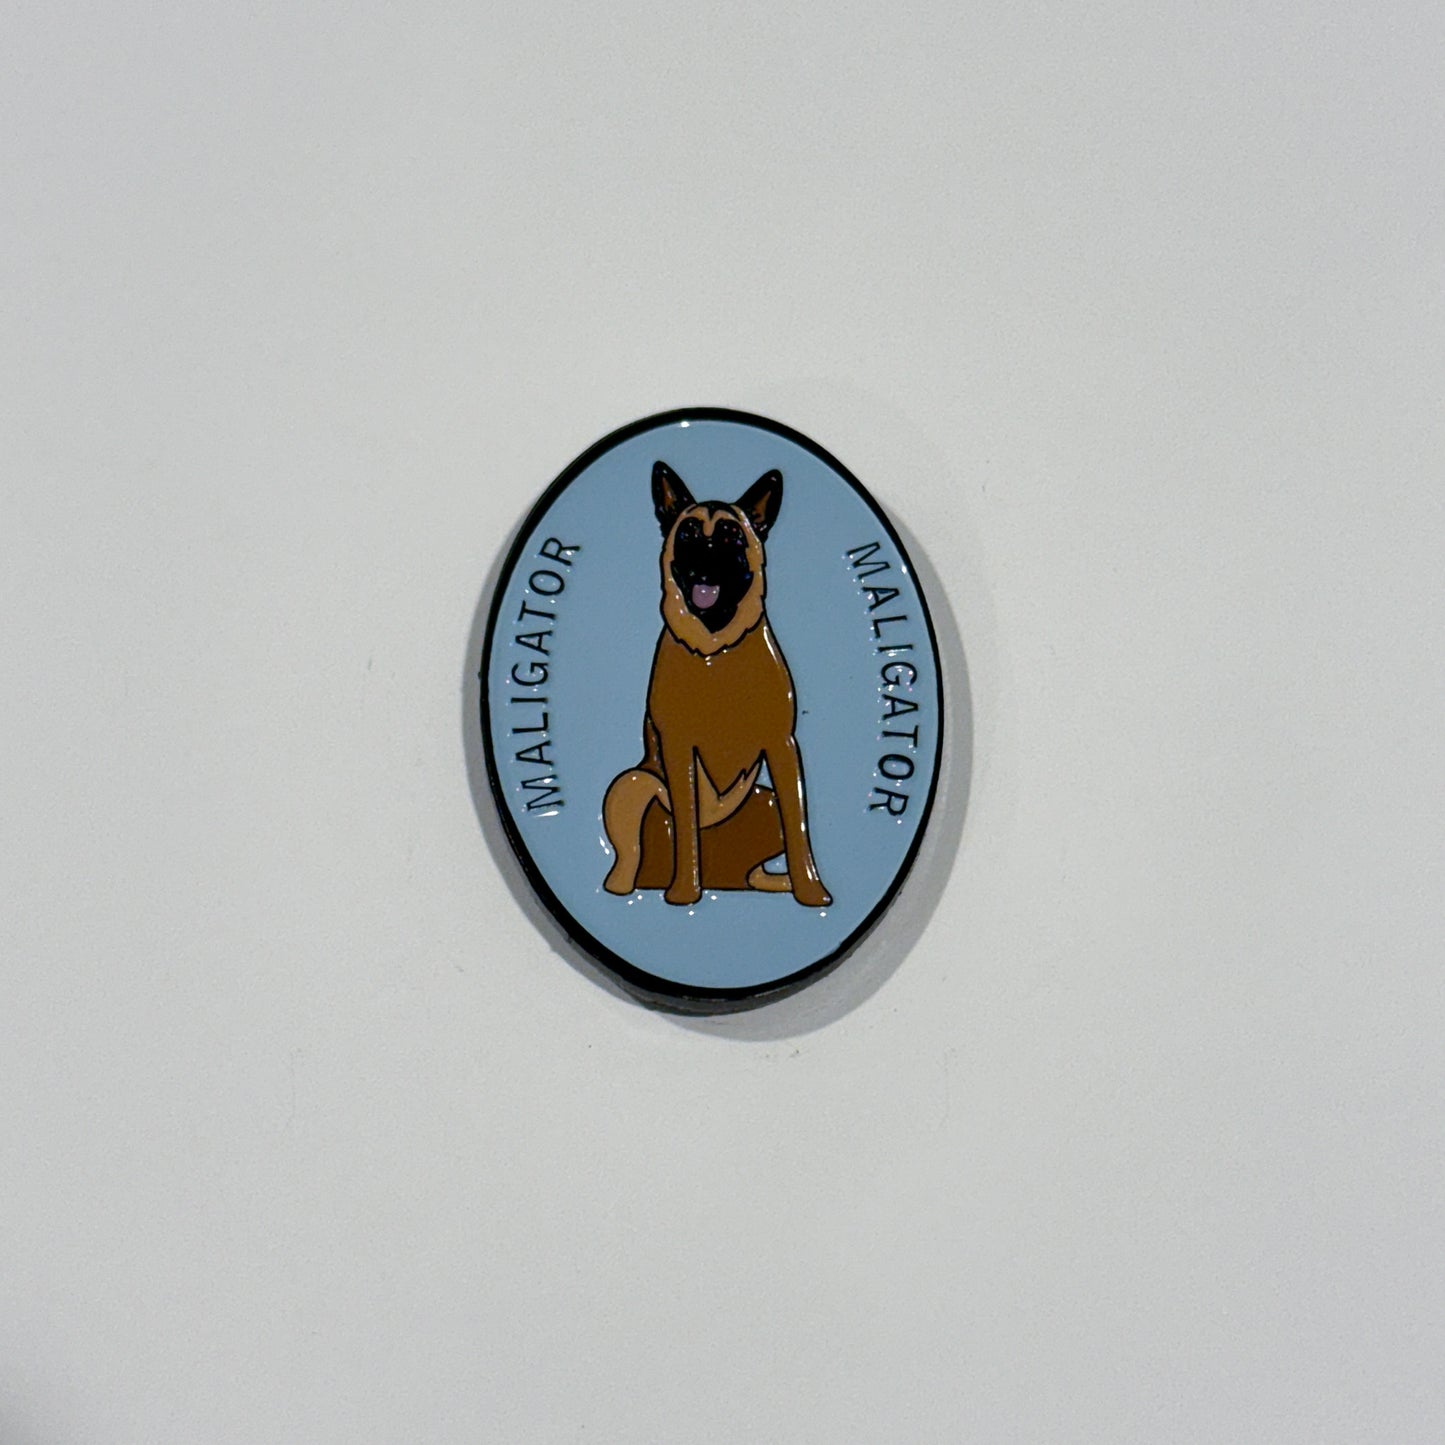 Maligaor dog sitting (cartoon). Oval light blue pin with cartoon dog. Maligator pin